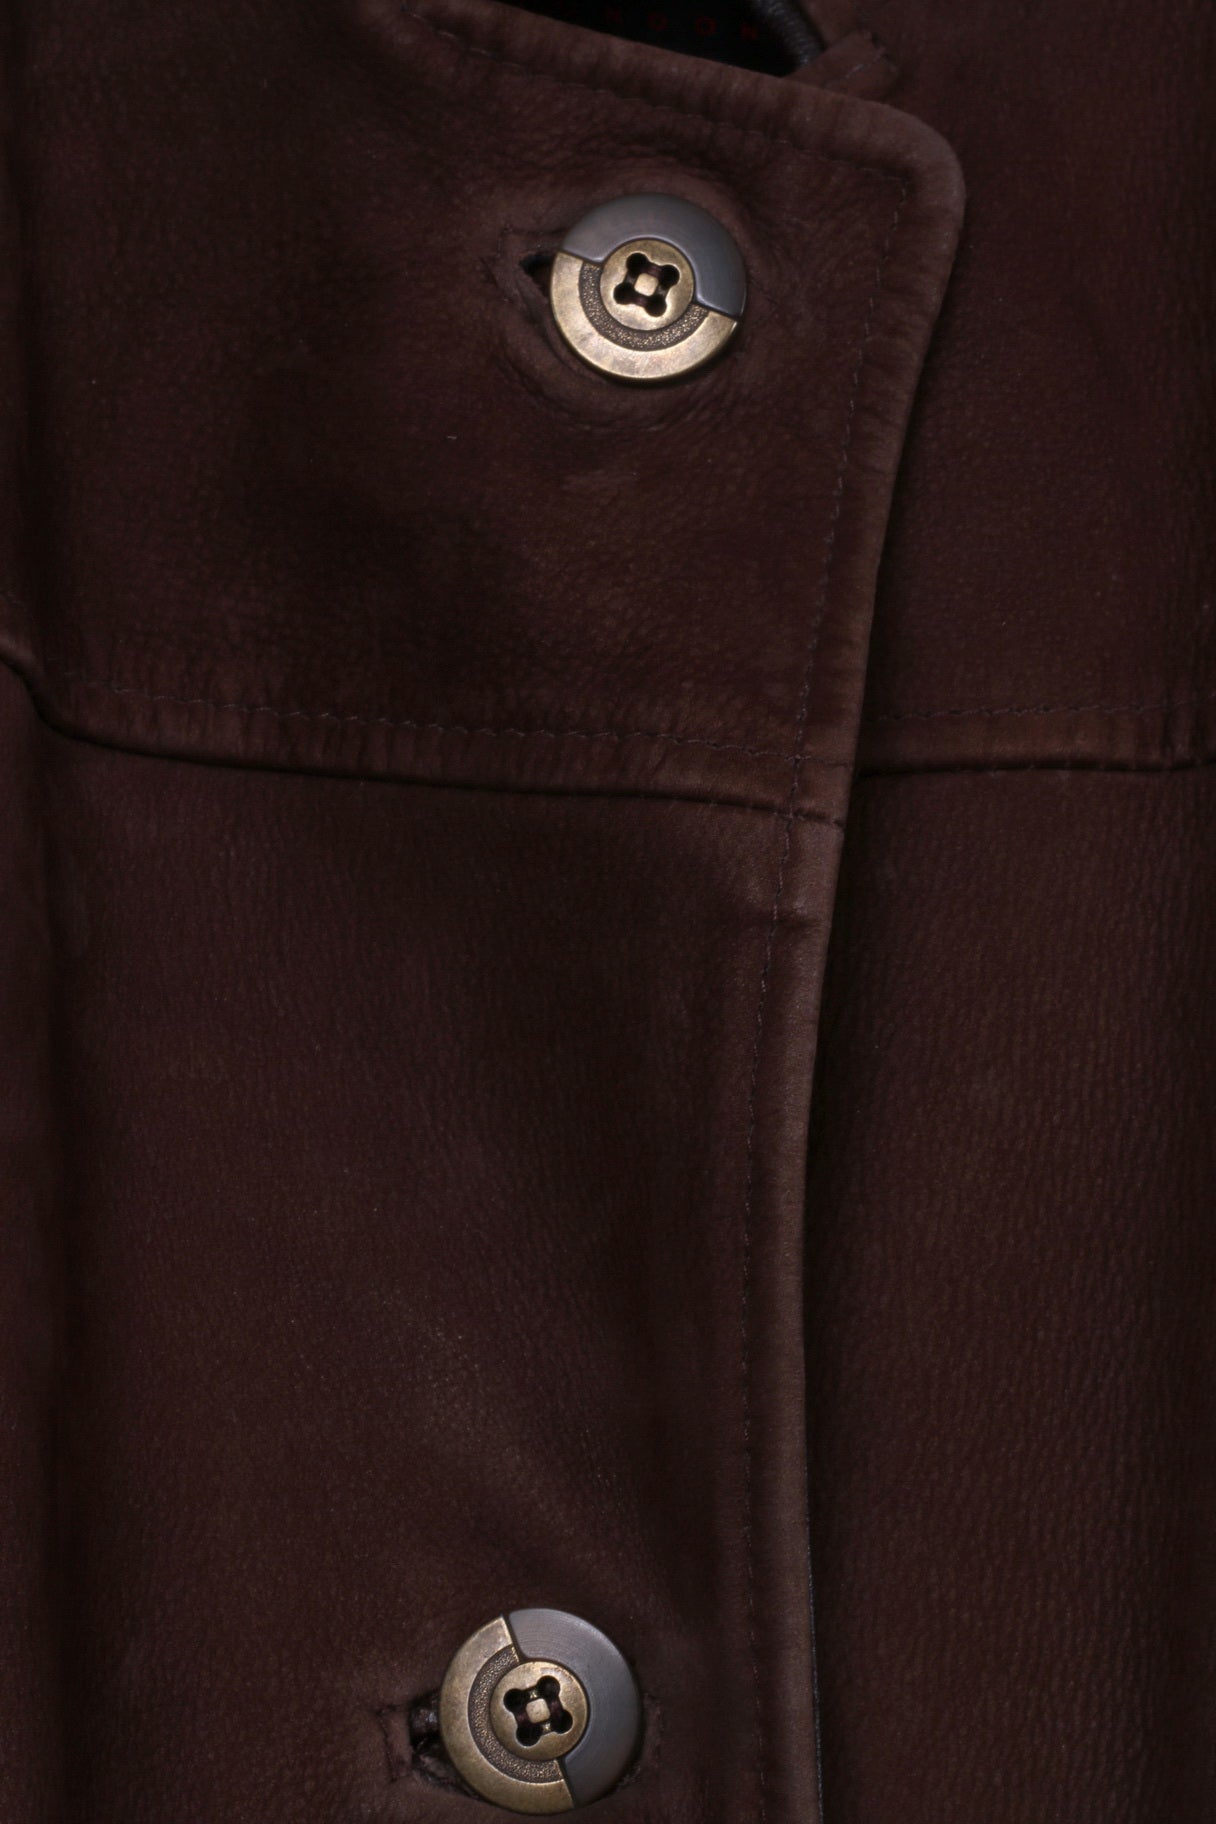 REWARD London Womens L Jacket Brown Leather Single Breasted Shoulder Pads